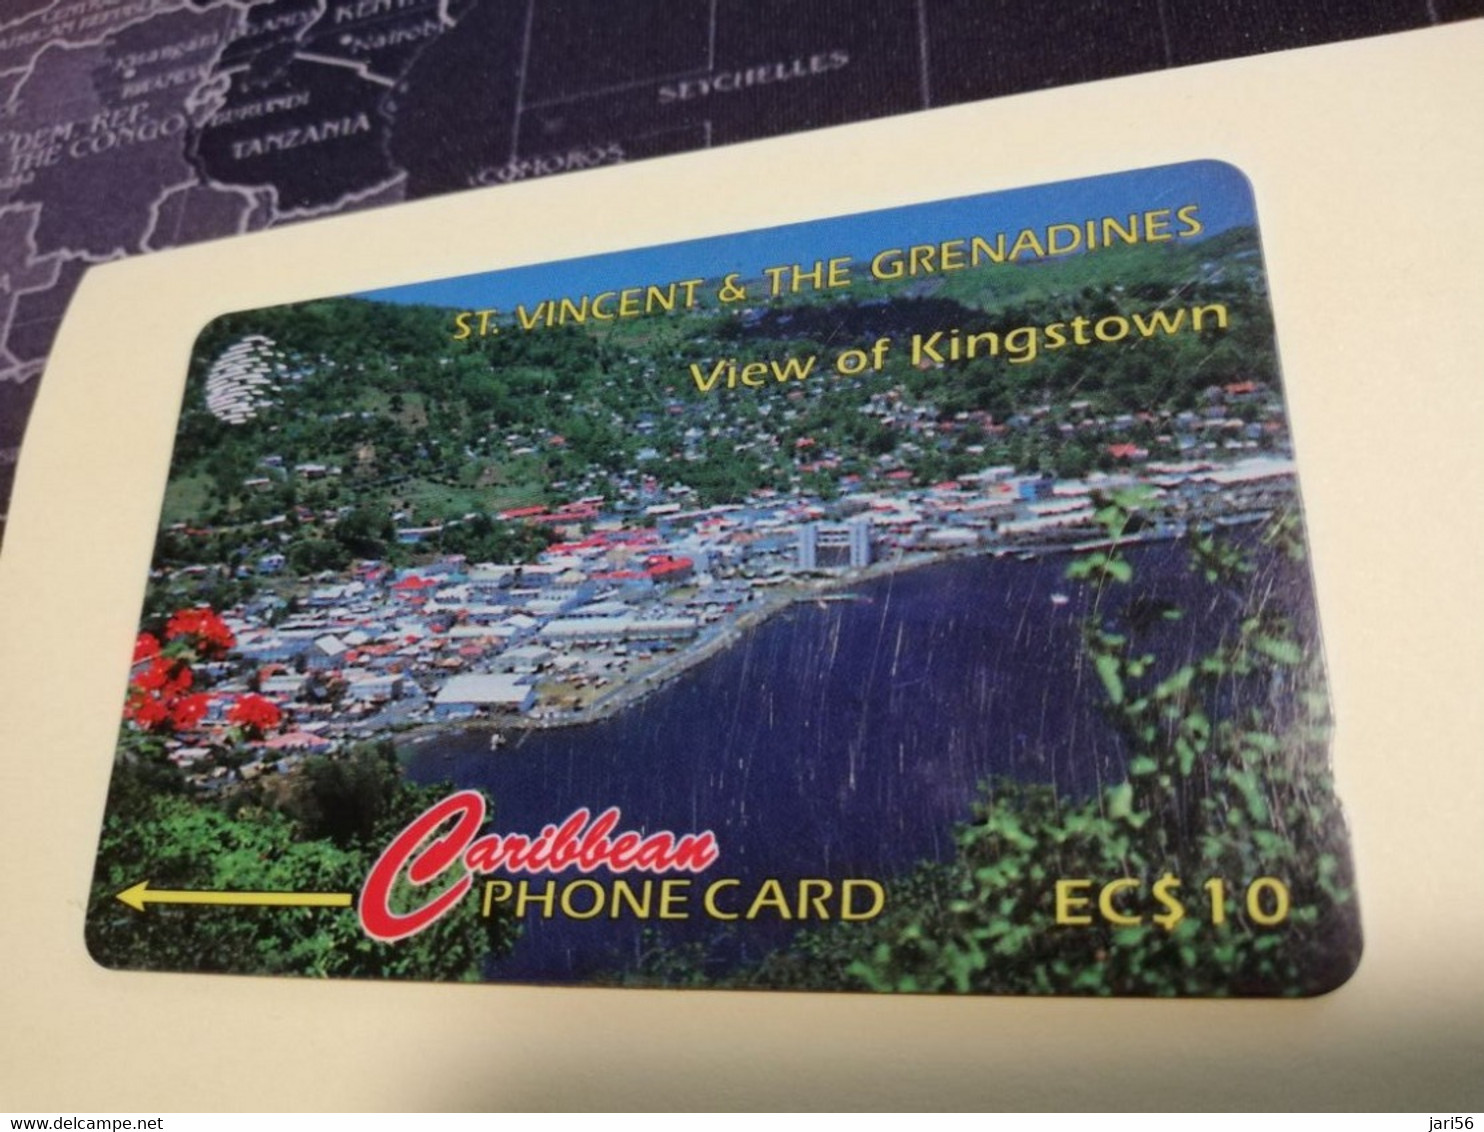 ST VINCENT & GRENADINES  GPT CARD   $ 10,- 13CSVB  VIEW OF KINGSTOWN            C&W    Fine Used  Card  **3372** - San Vicente Y Las Granadinas